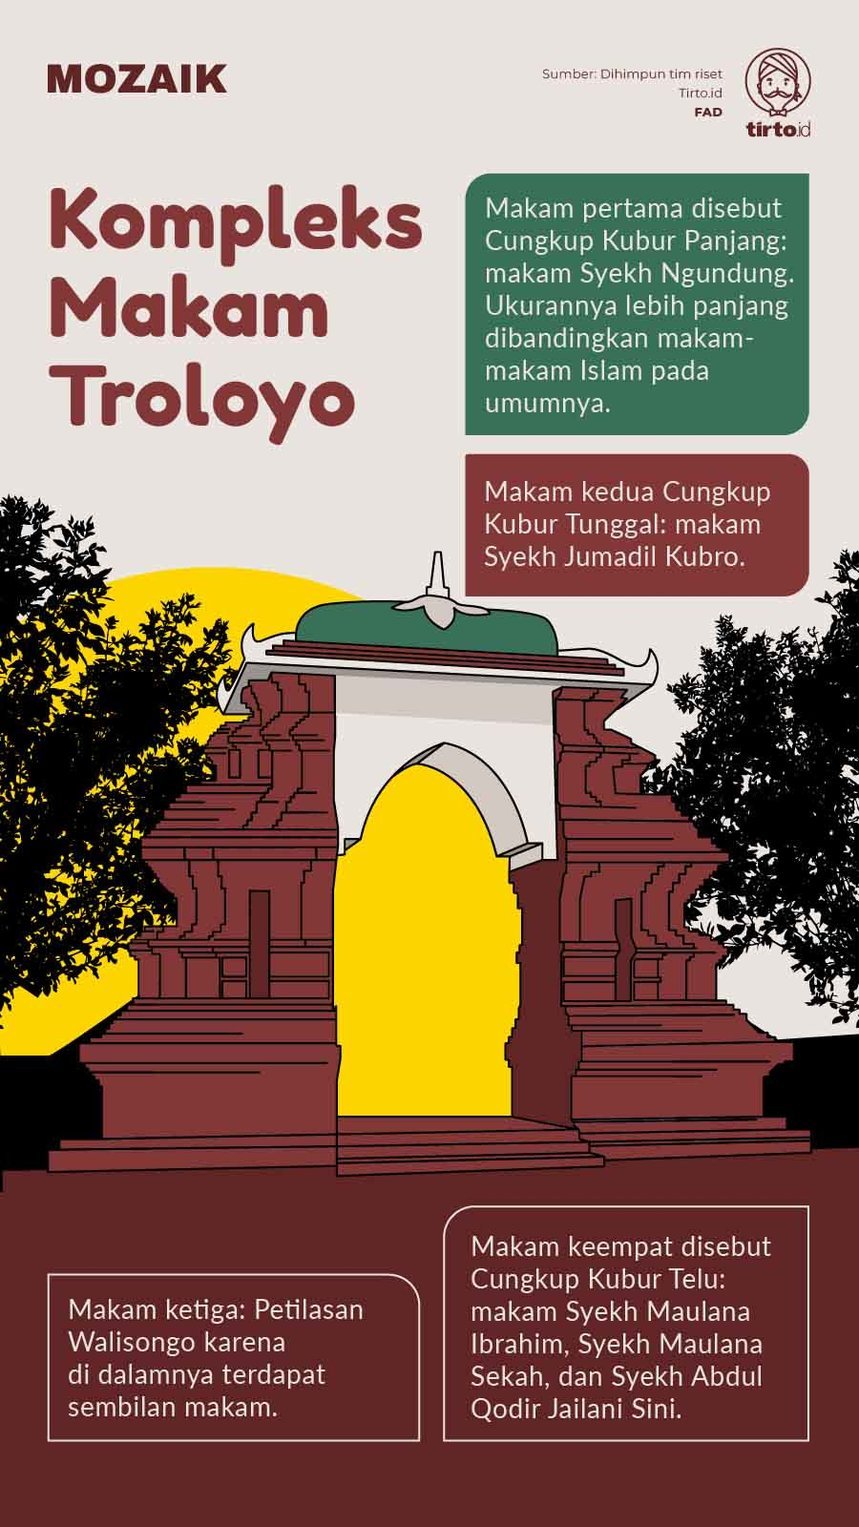 Infografik Mozaik Komplek Makam Troloyo